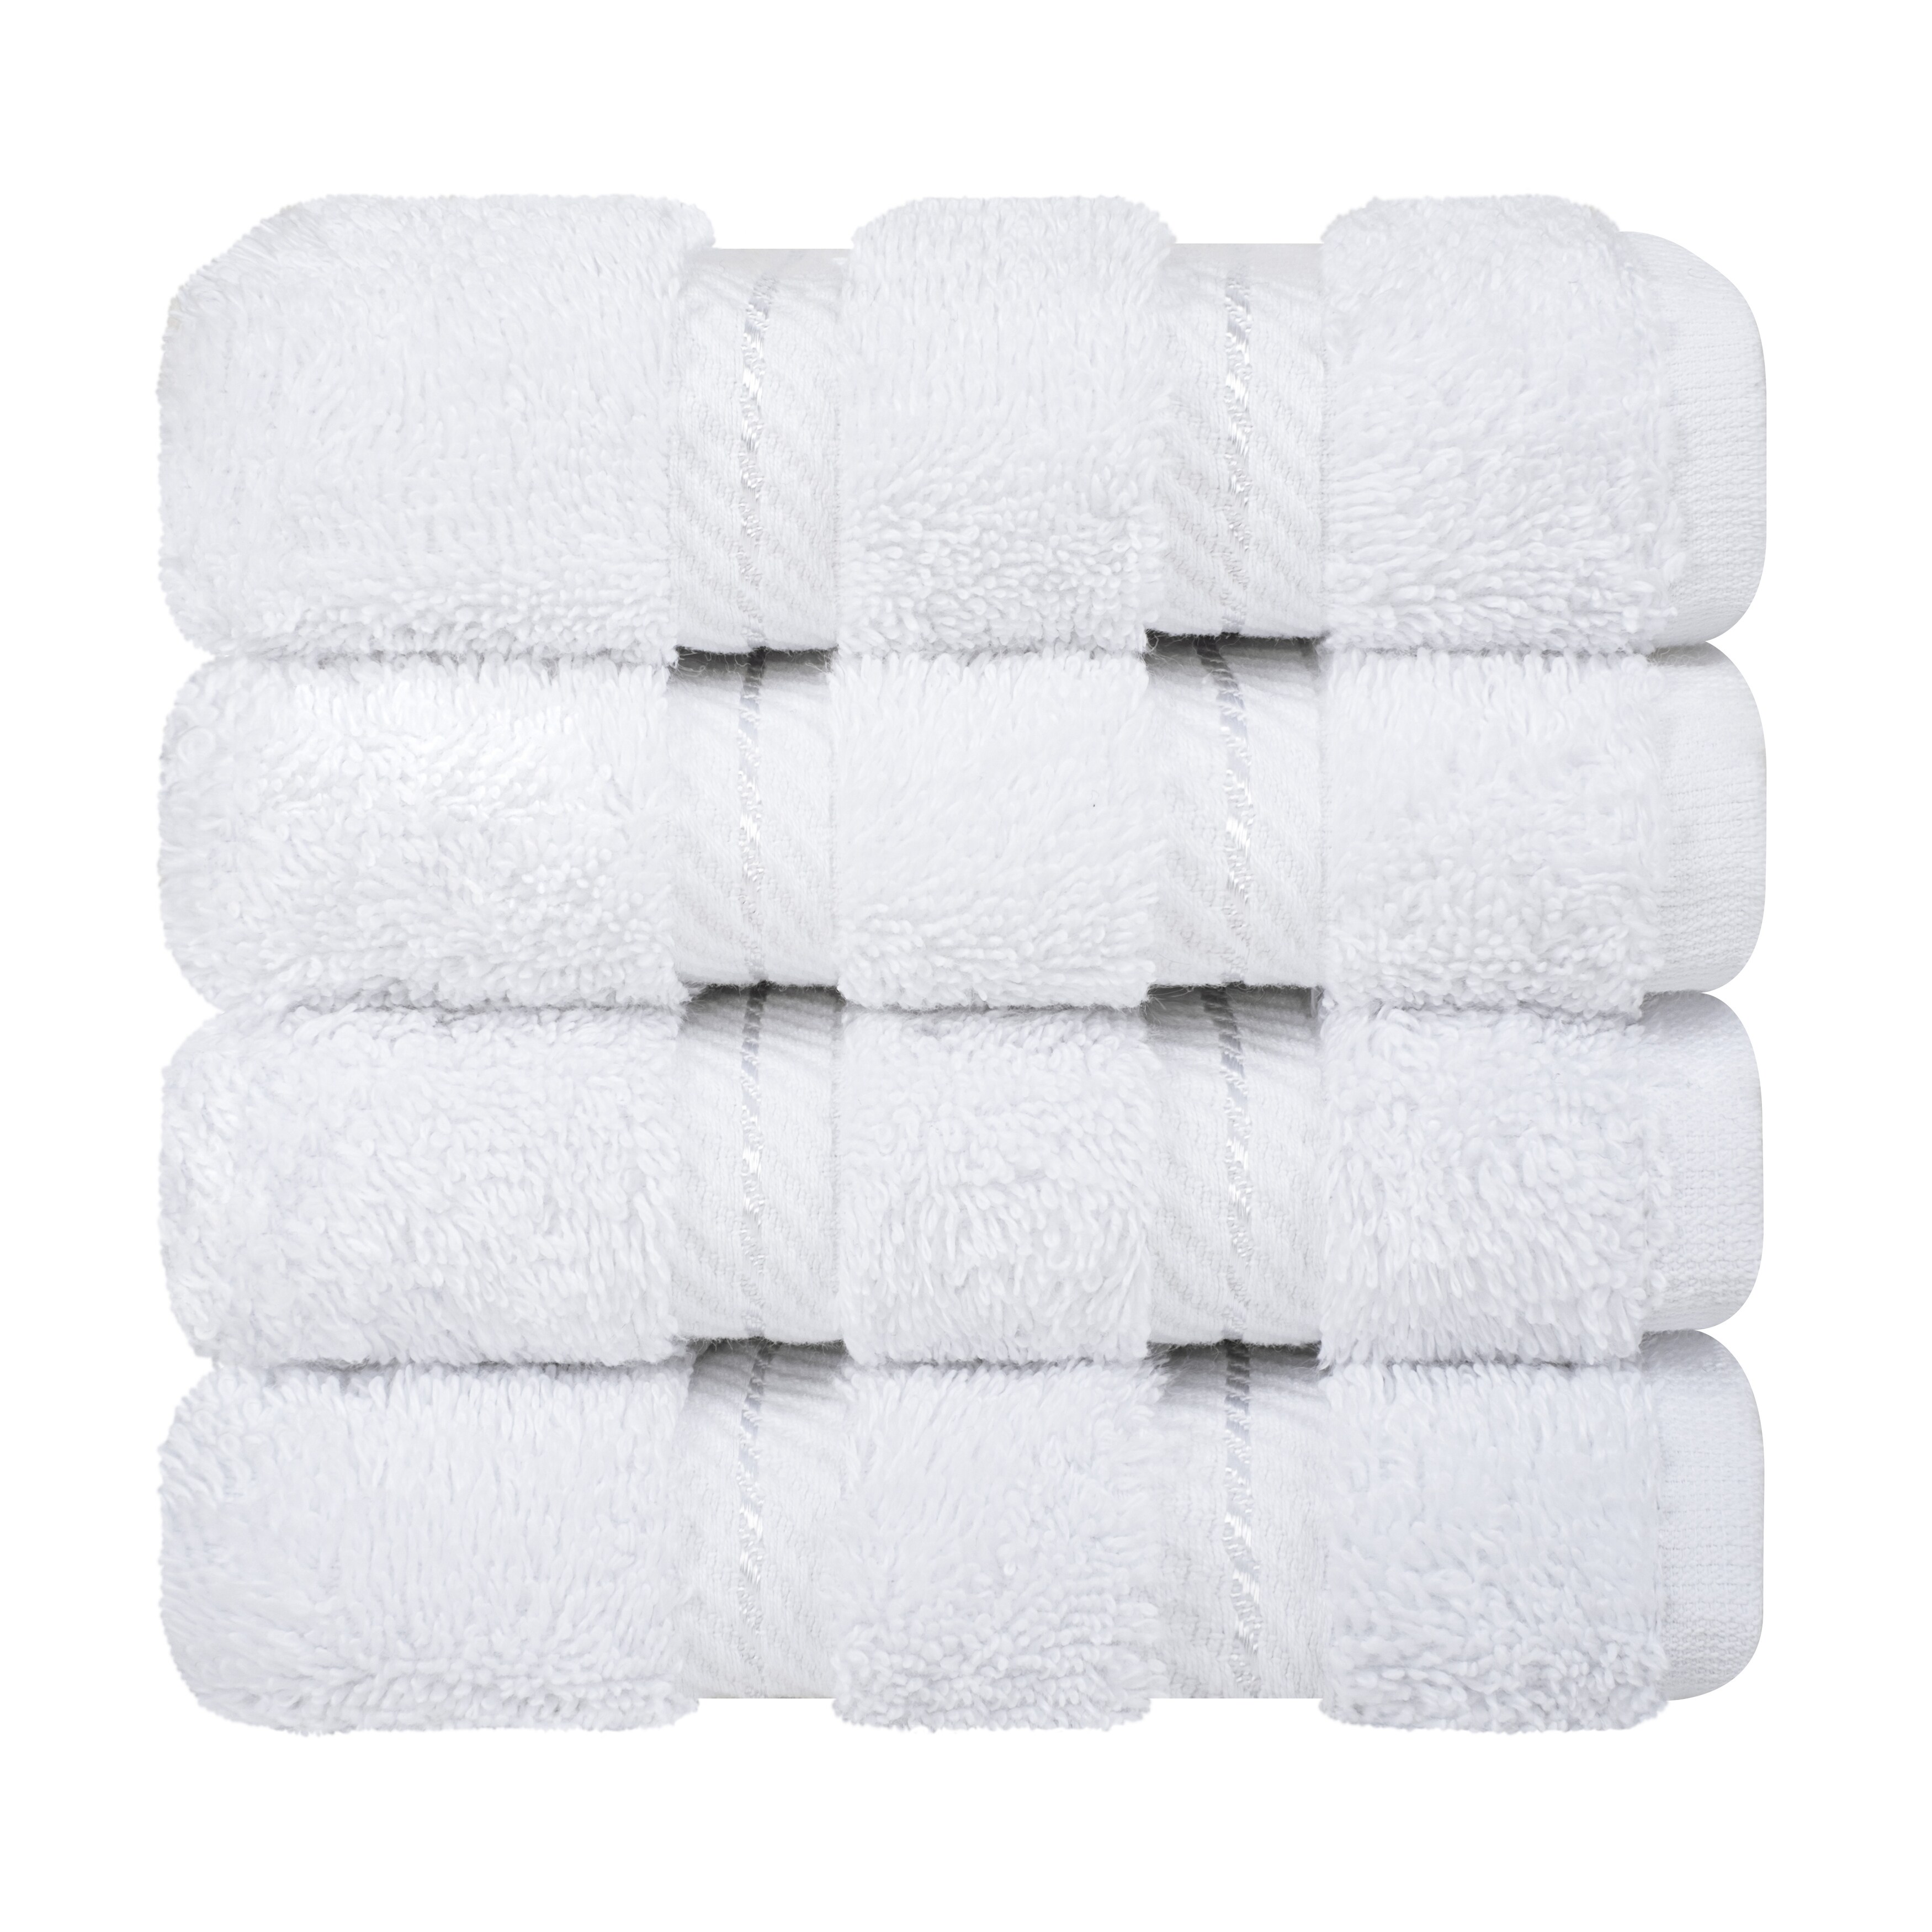 https://ak1.ostkcdn.com/images/products/is/images/direct/0483bebb66ae2f172baff93b2f9a8fbe8f1d5b31/American-Soft-Linen-Premium-Genuine-Turkish-Cotton-4-Piece-Washcloth-Set.jpg